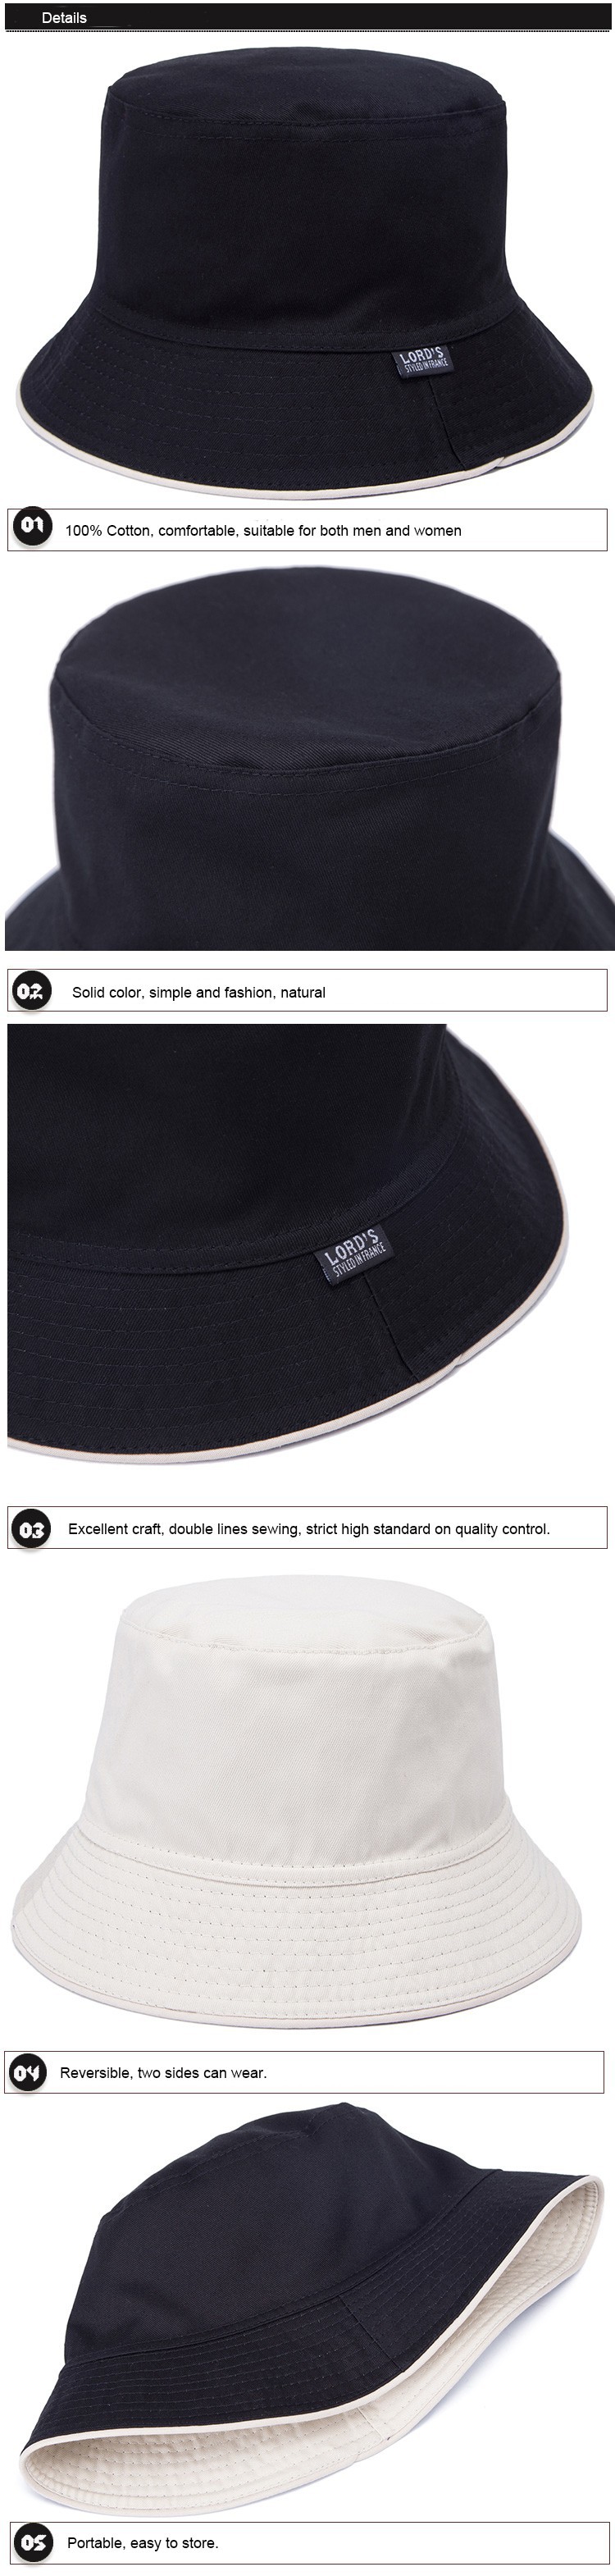 Bucket hat details